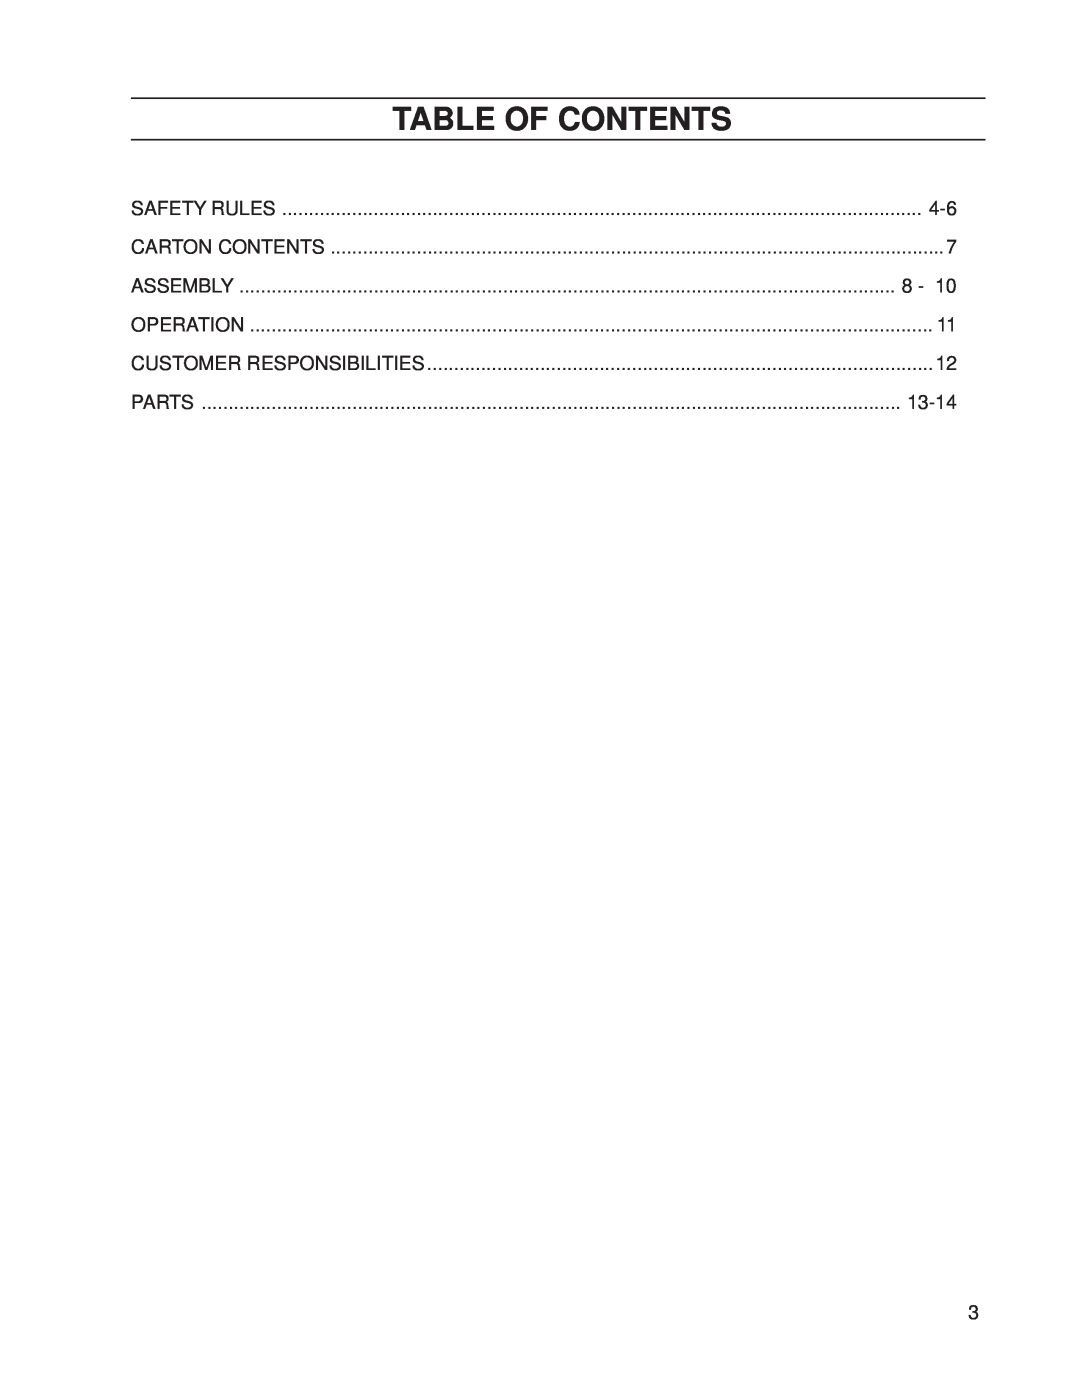 Dixon 539 131301 manual Table Of Contents, Assembly, Parts, 13-14, Carton Contents, Operation 